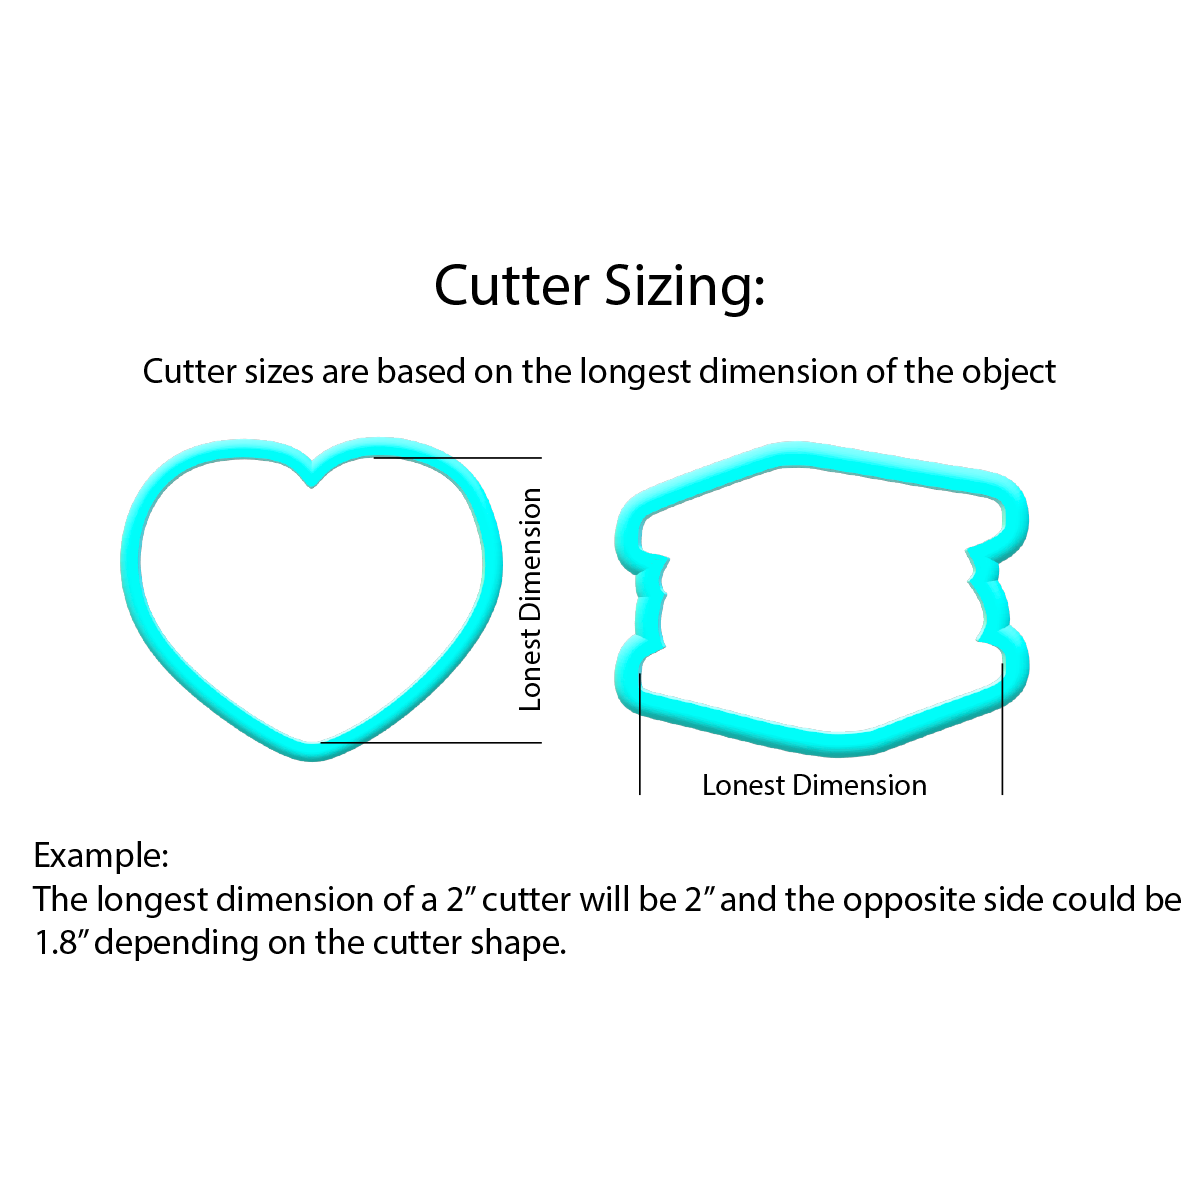 Valentines Envelope Cookie Cutters | STL Files